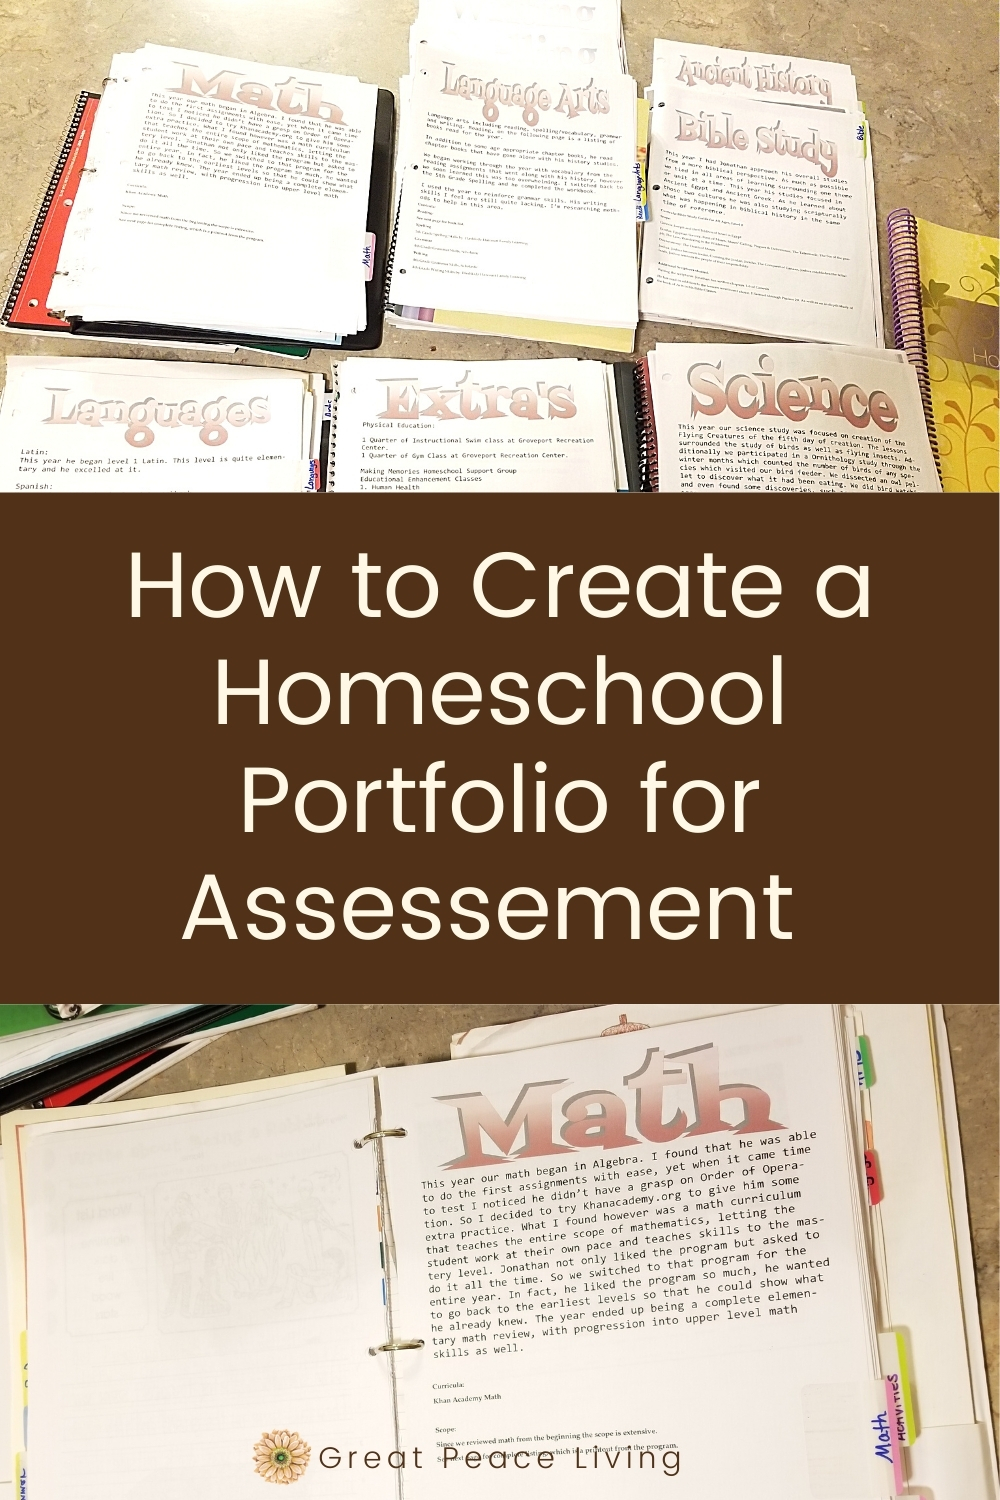 How to Prepare a Portfolio for Homeschool Assessments | Great Peace Living #homeschooling #homeschoolmoms #portfolioassessments #ihsnet